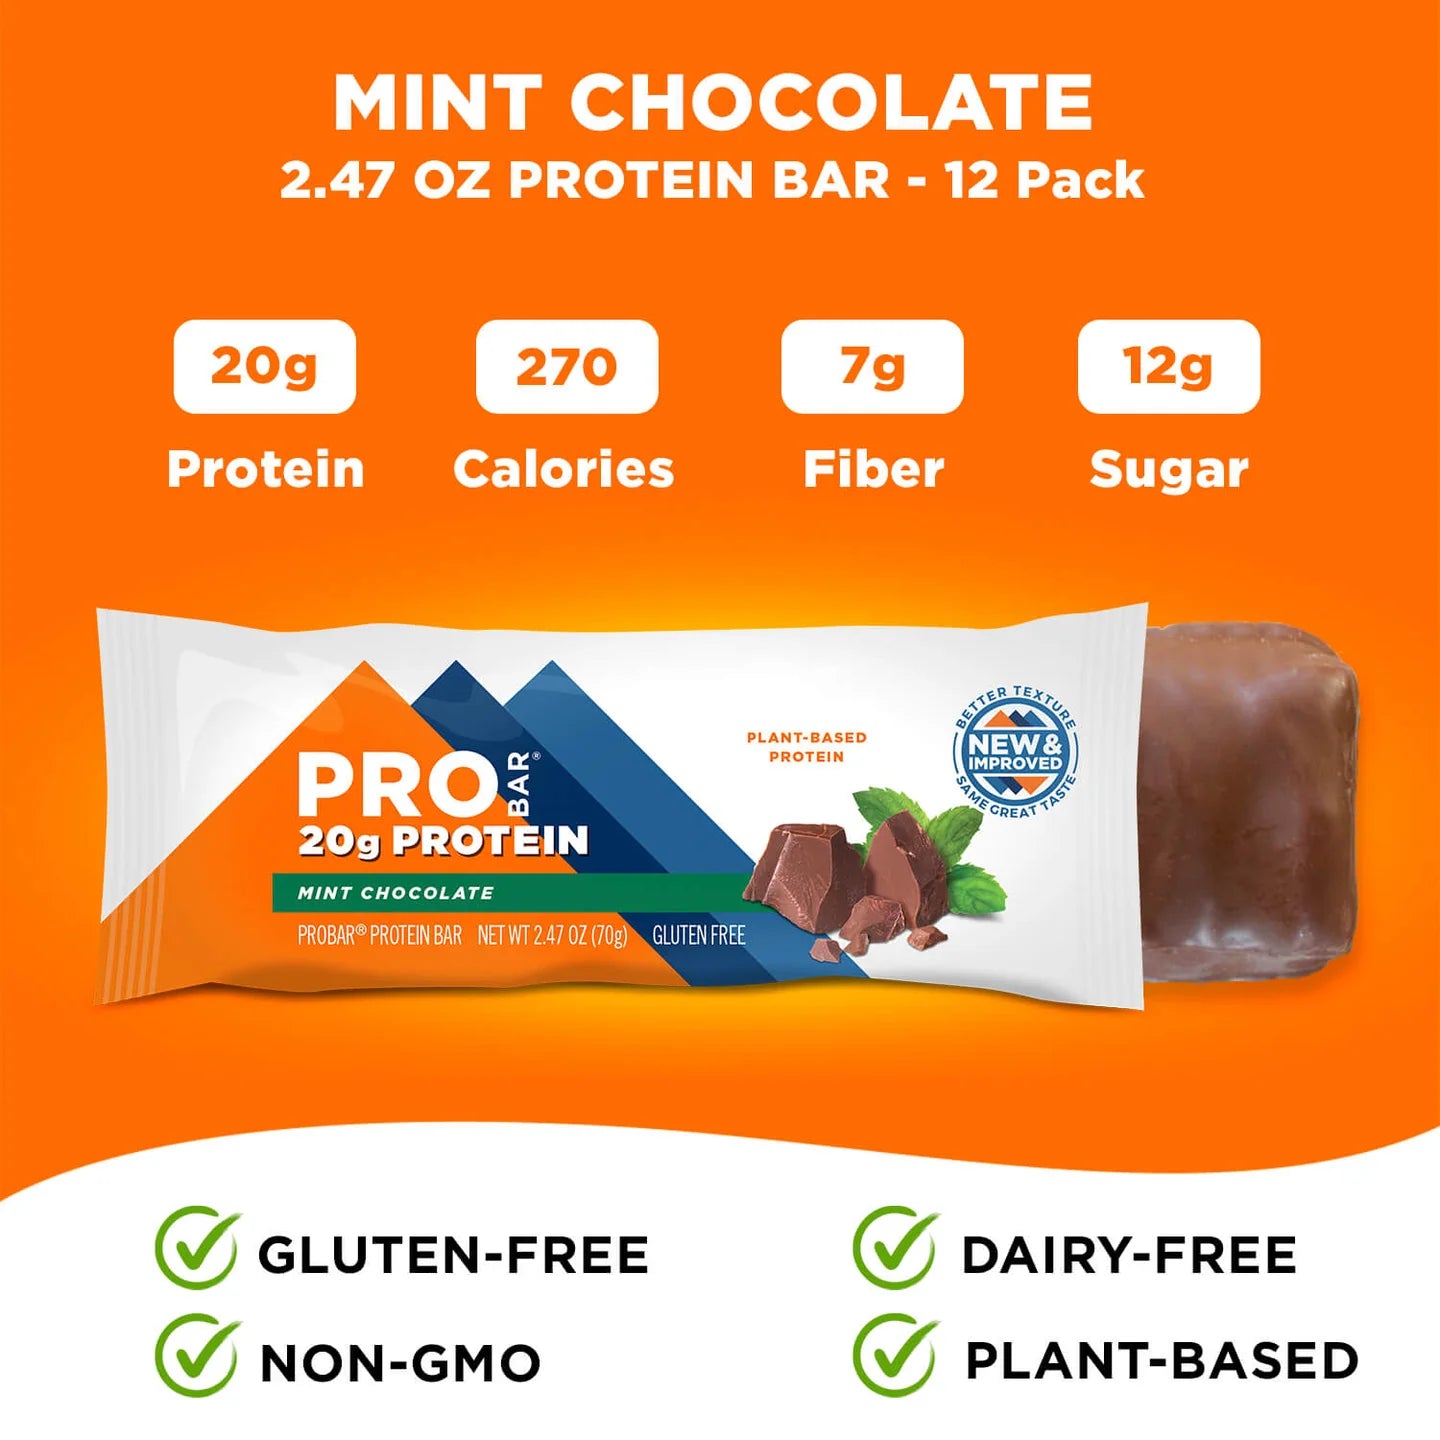 ProBar Protein - Mint Chocolate SALE!